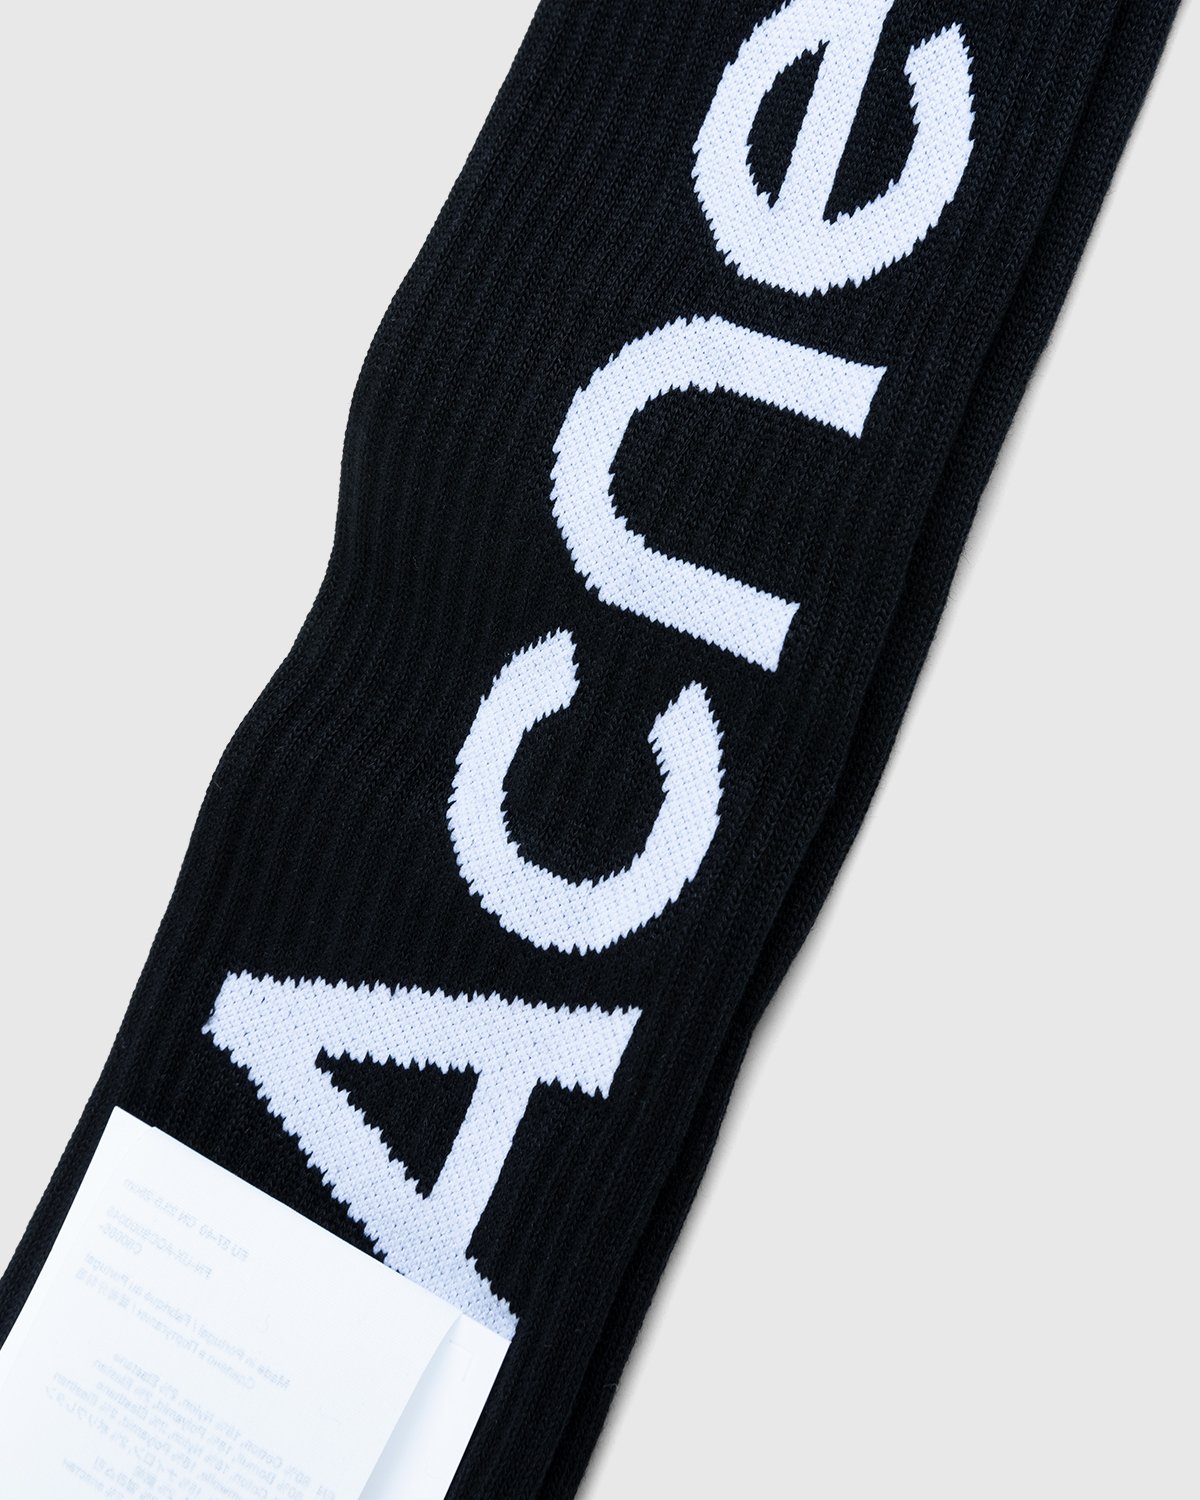 Acne Studios - Logo Socks Black - Accessories - Black - Image 3